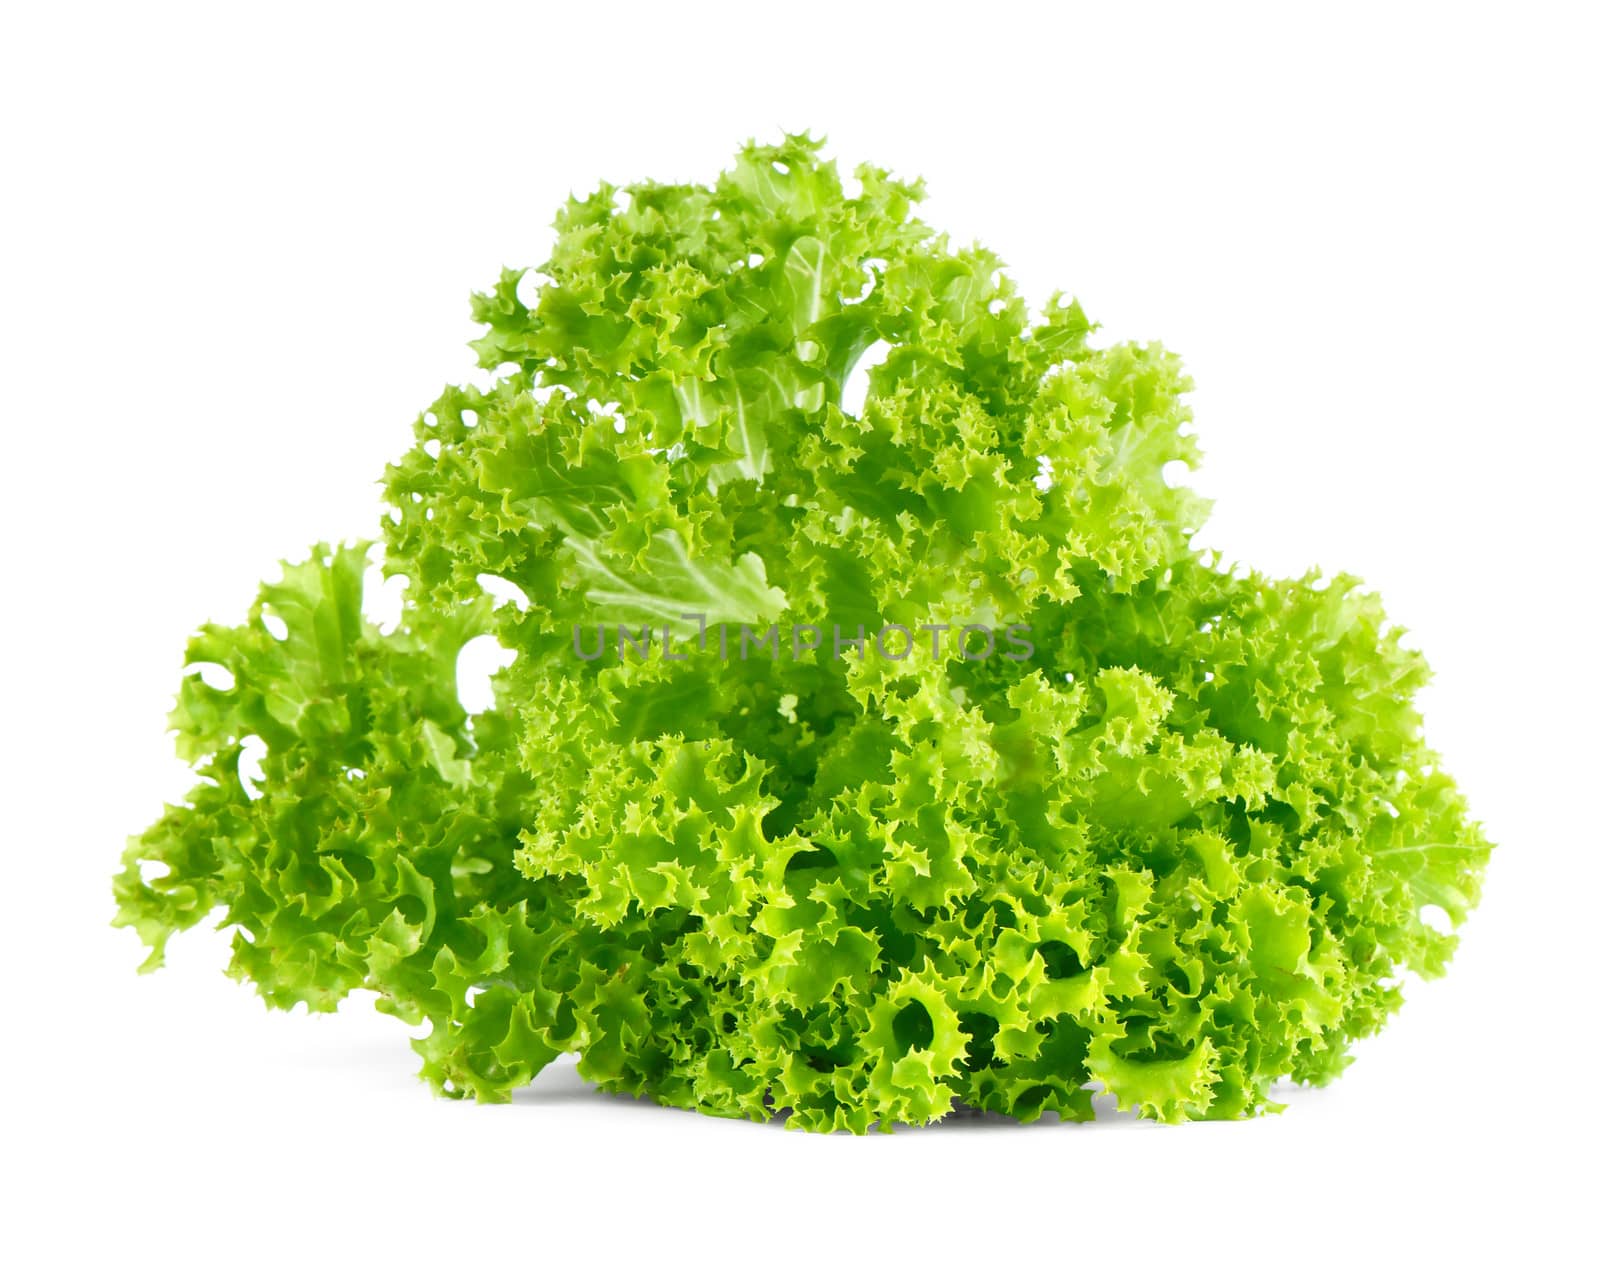 Fresh green lettuce salad isolated on white background. by Bedolaga